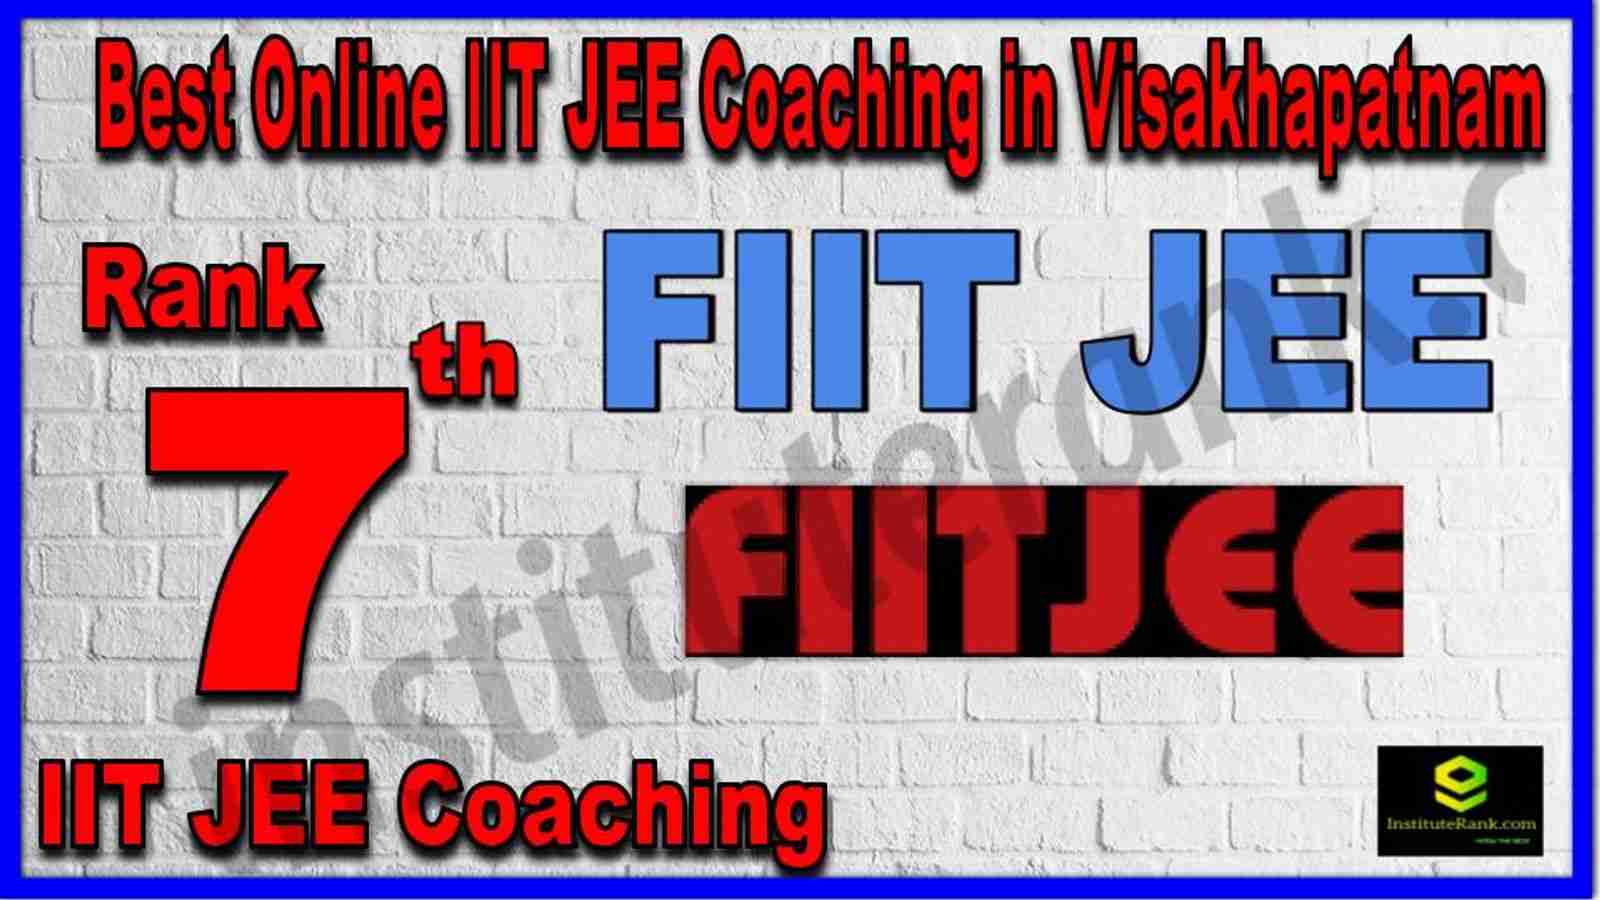 Rank 7th Best Online IIT JEE Coaching in Visakhapatnam